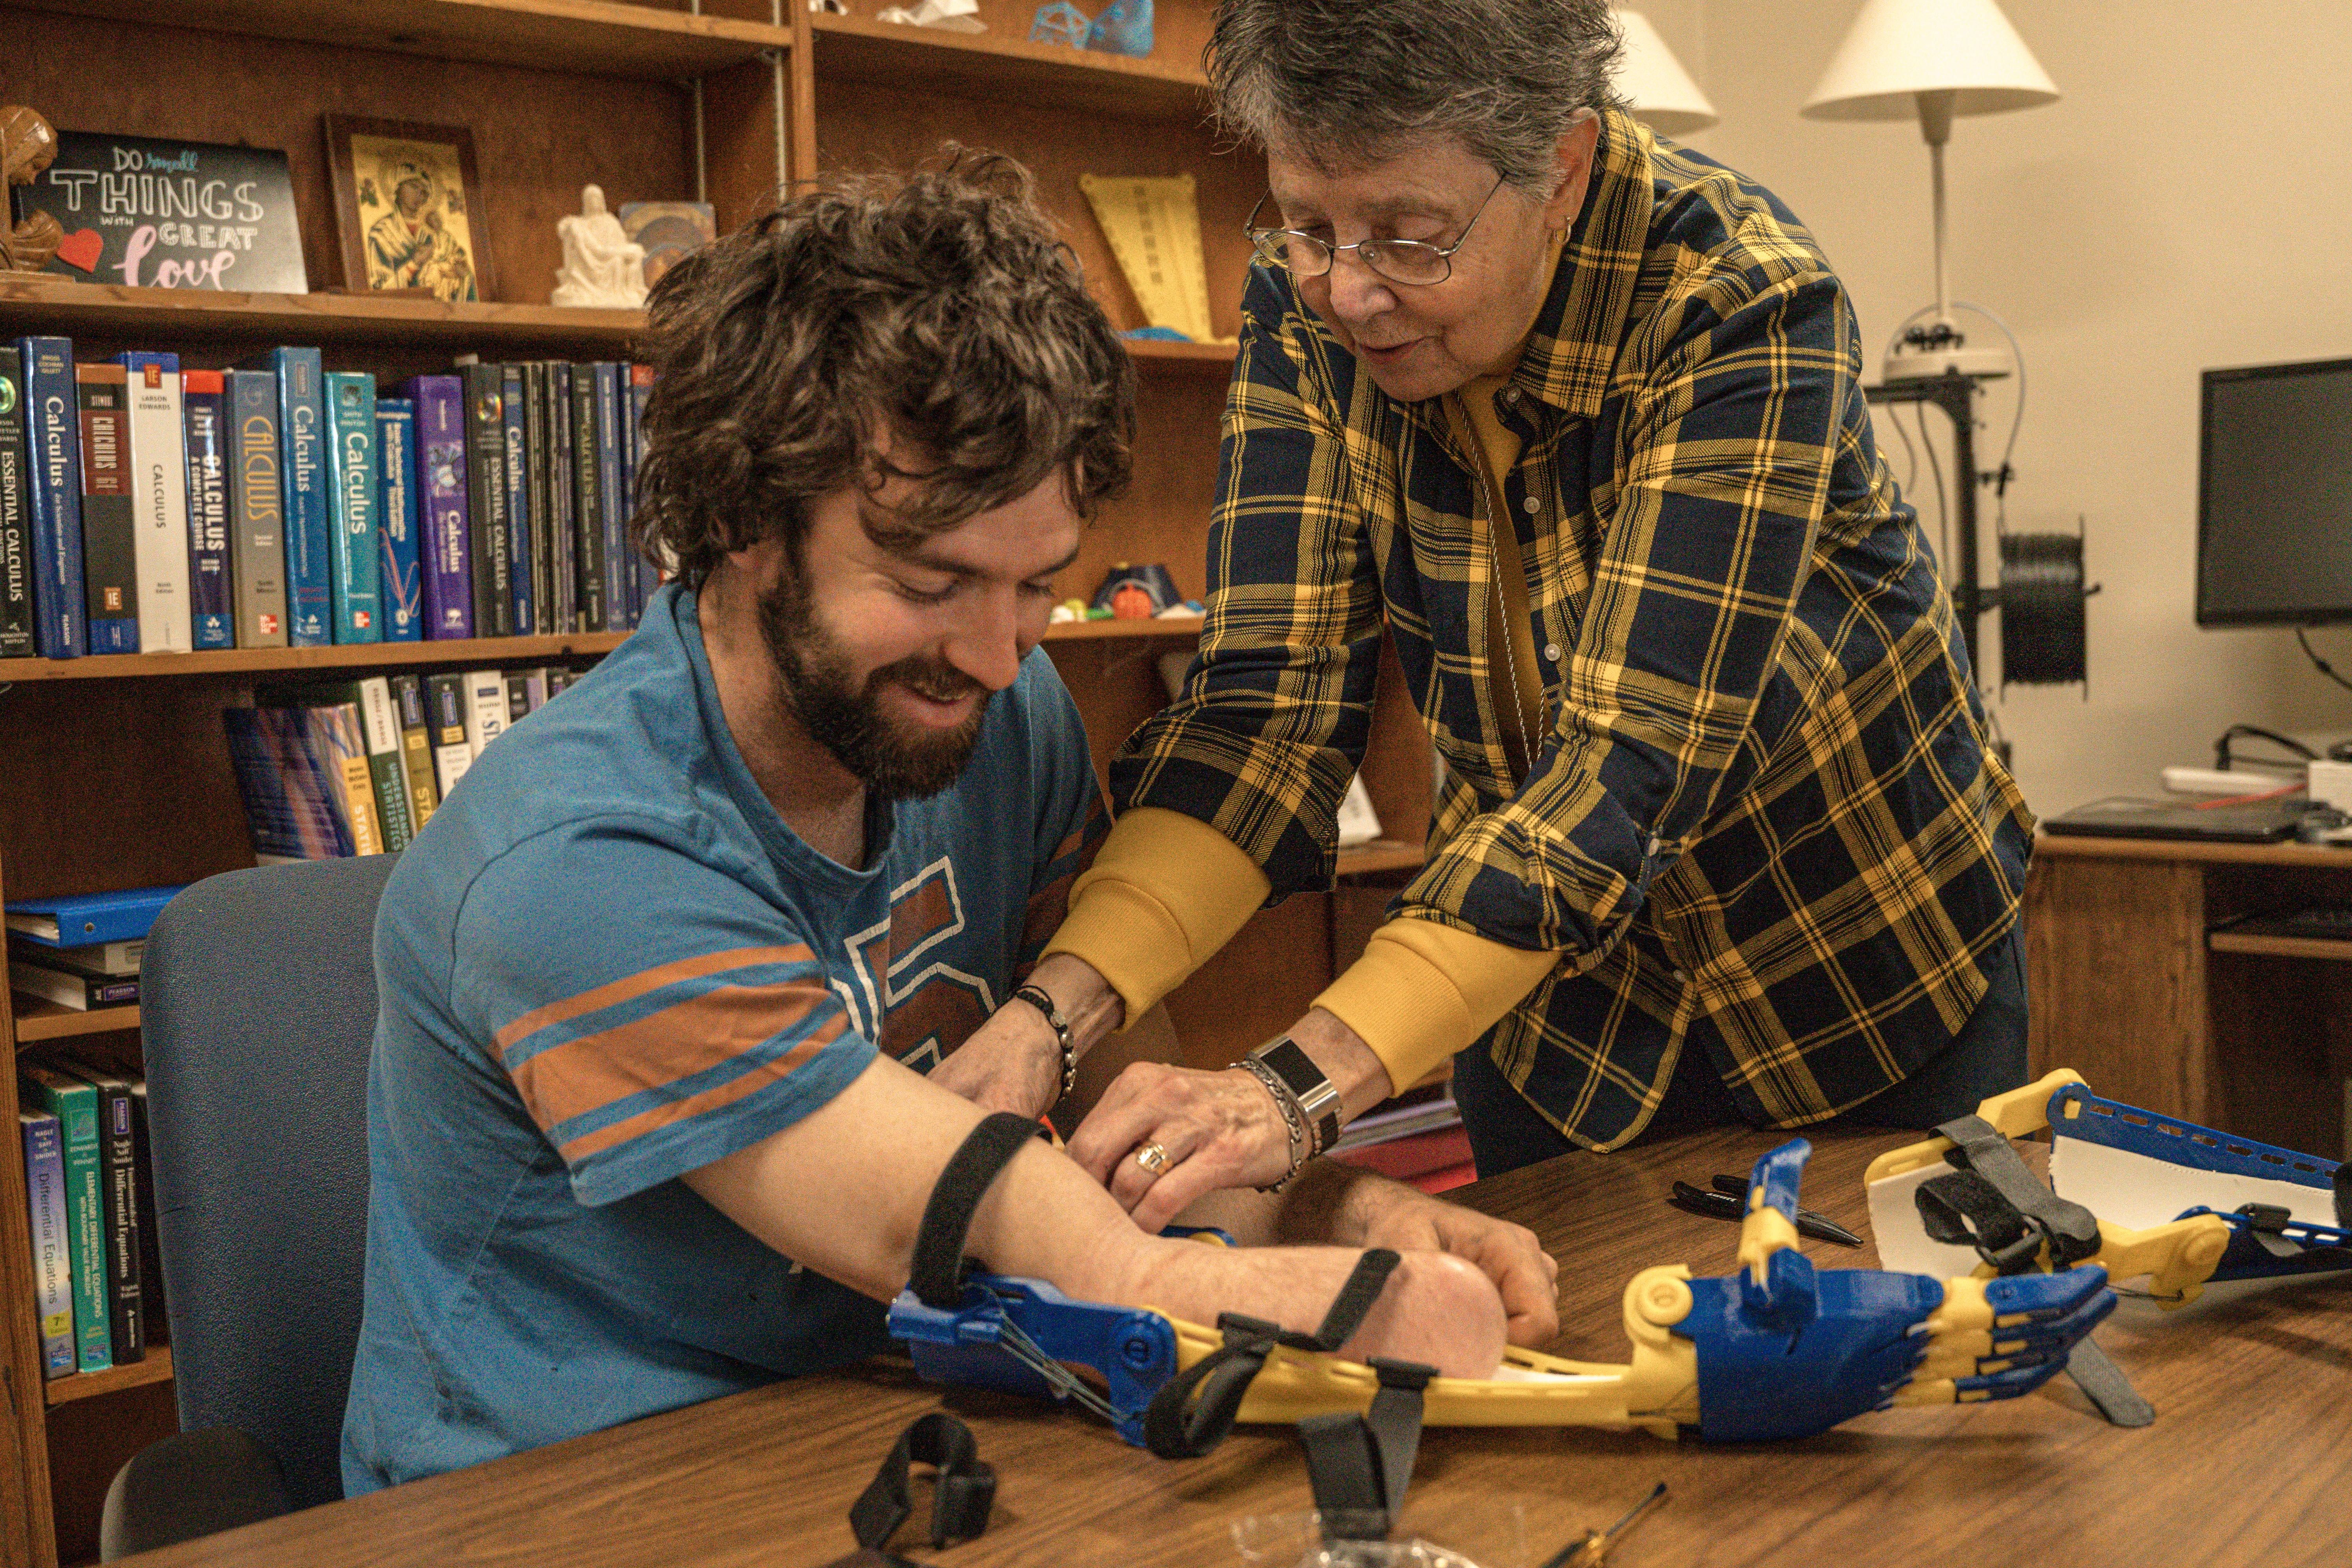 Sr. Bonita helps Trask adjust his new arm prosthetic